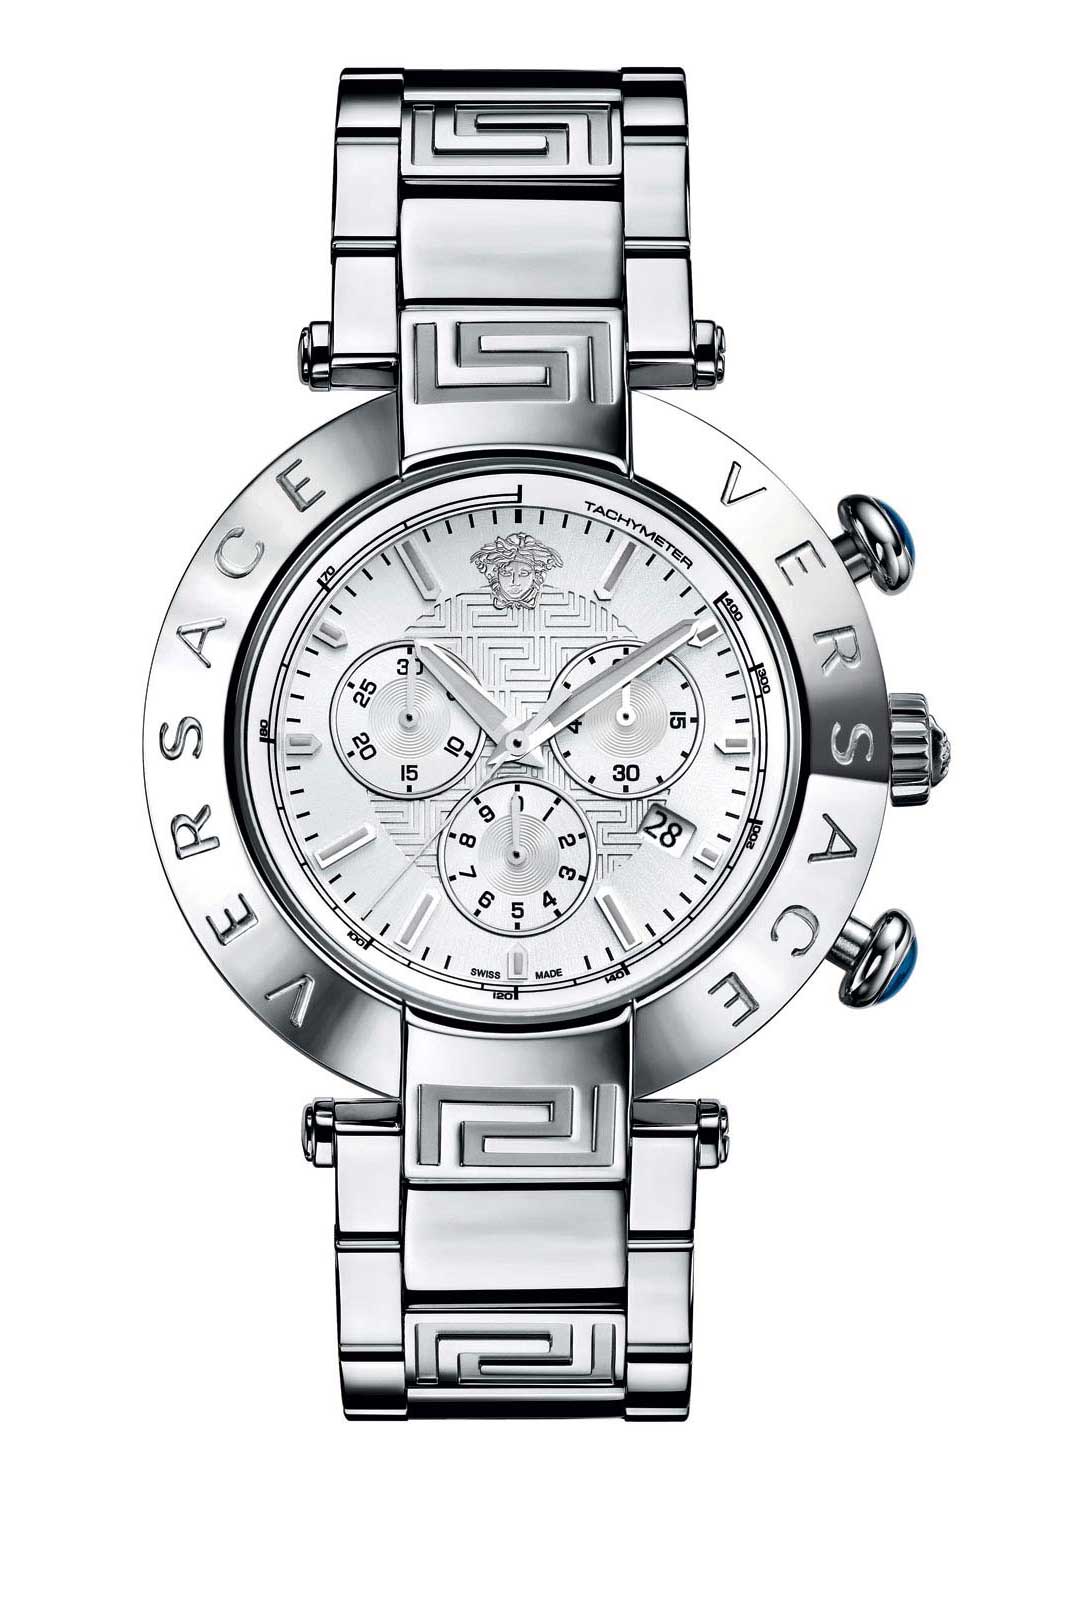 Versace QUARTZ CHRONO watch 5040D WHITE